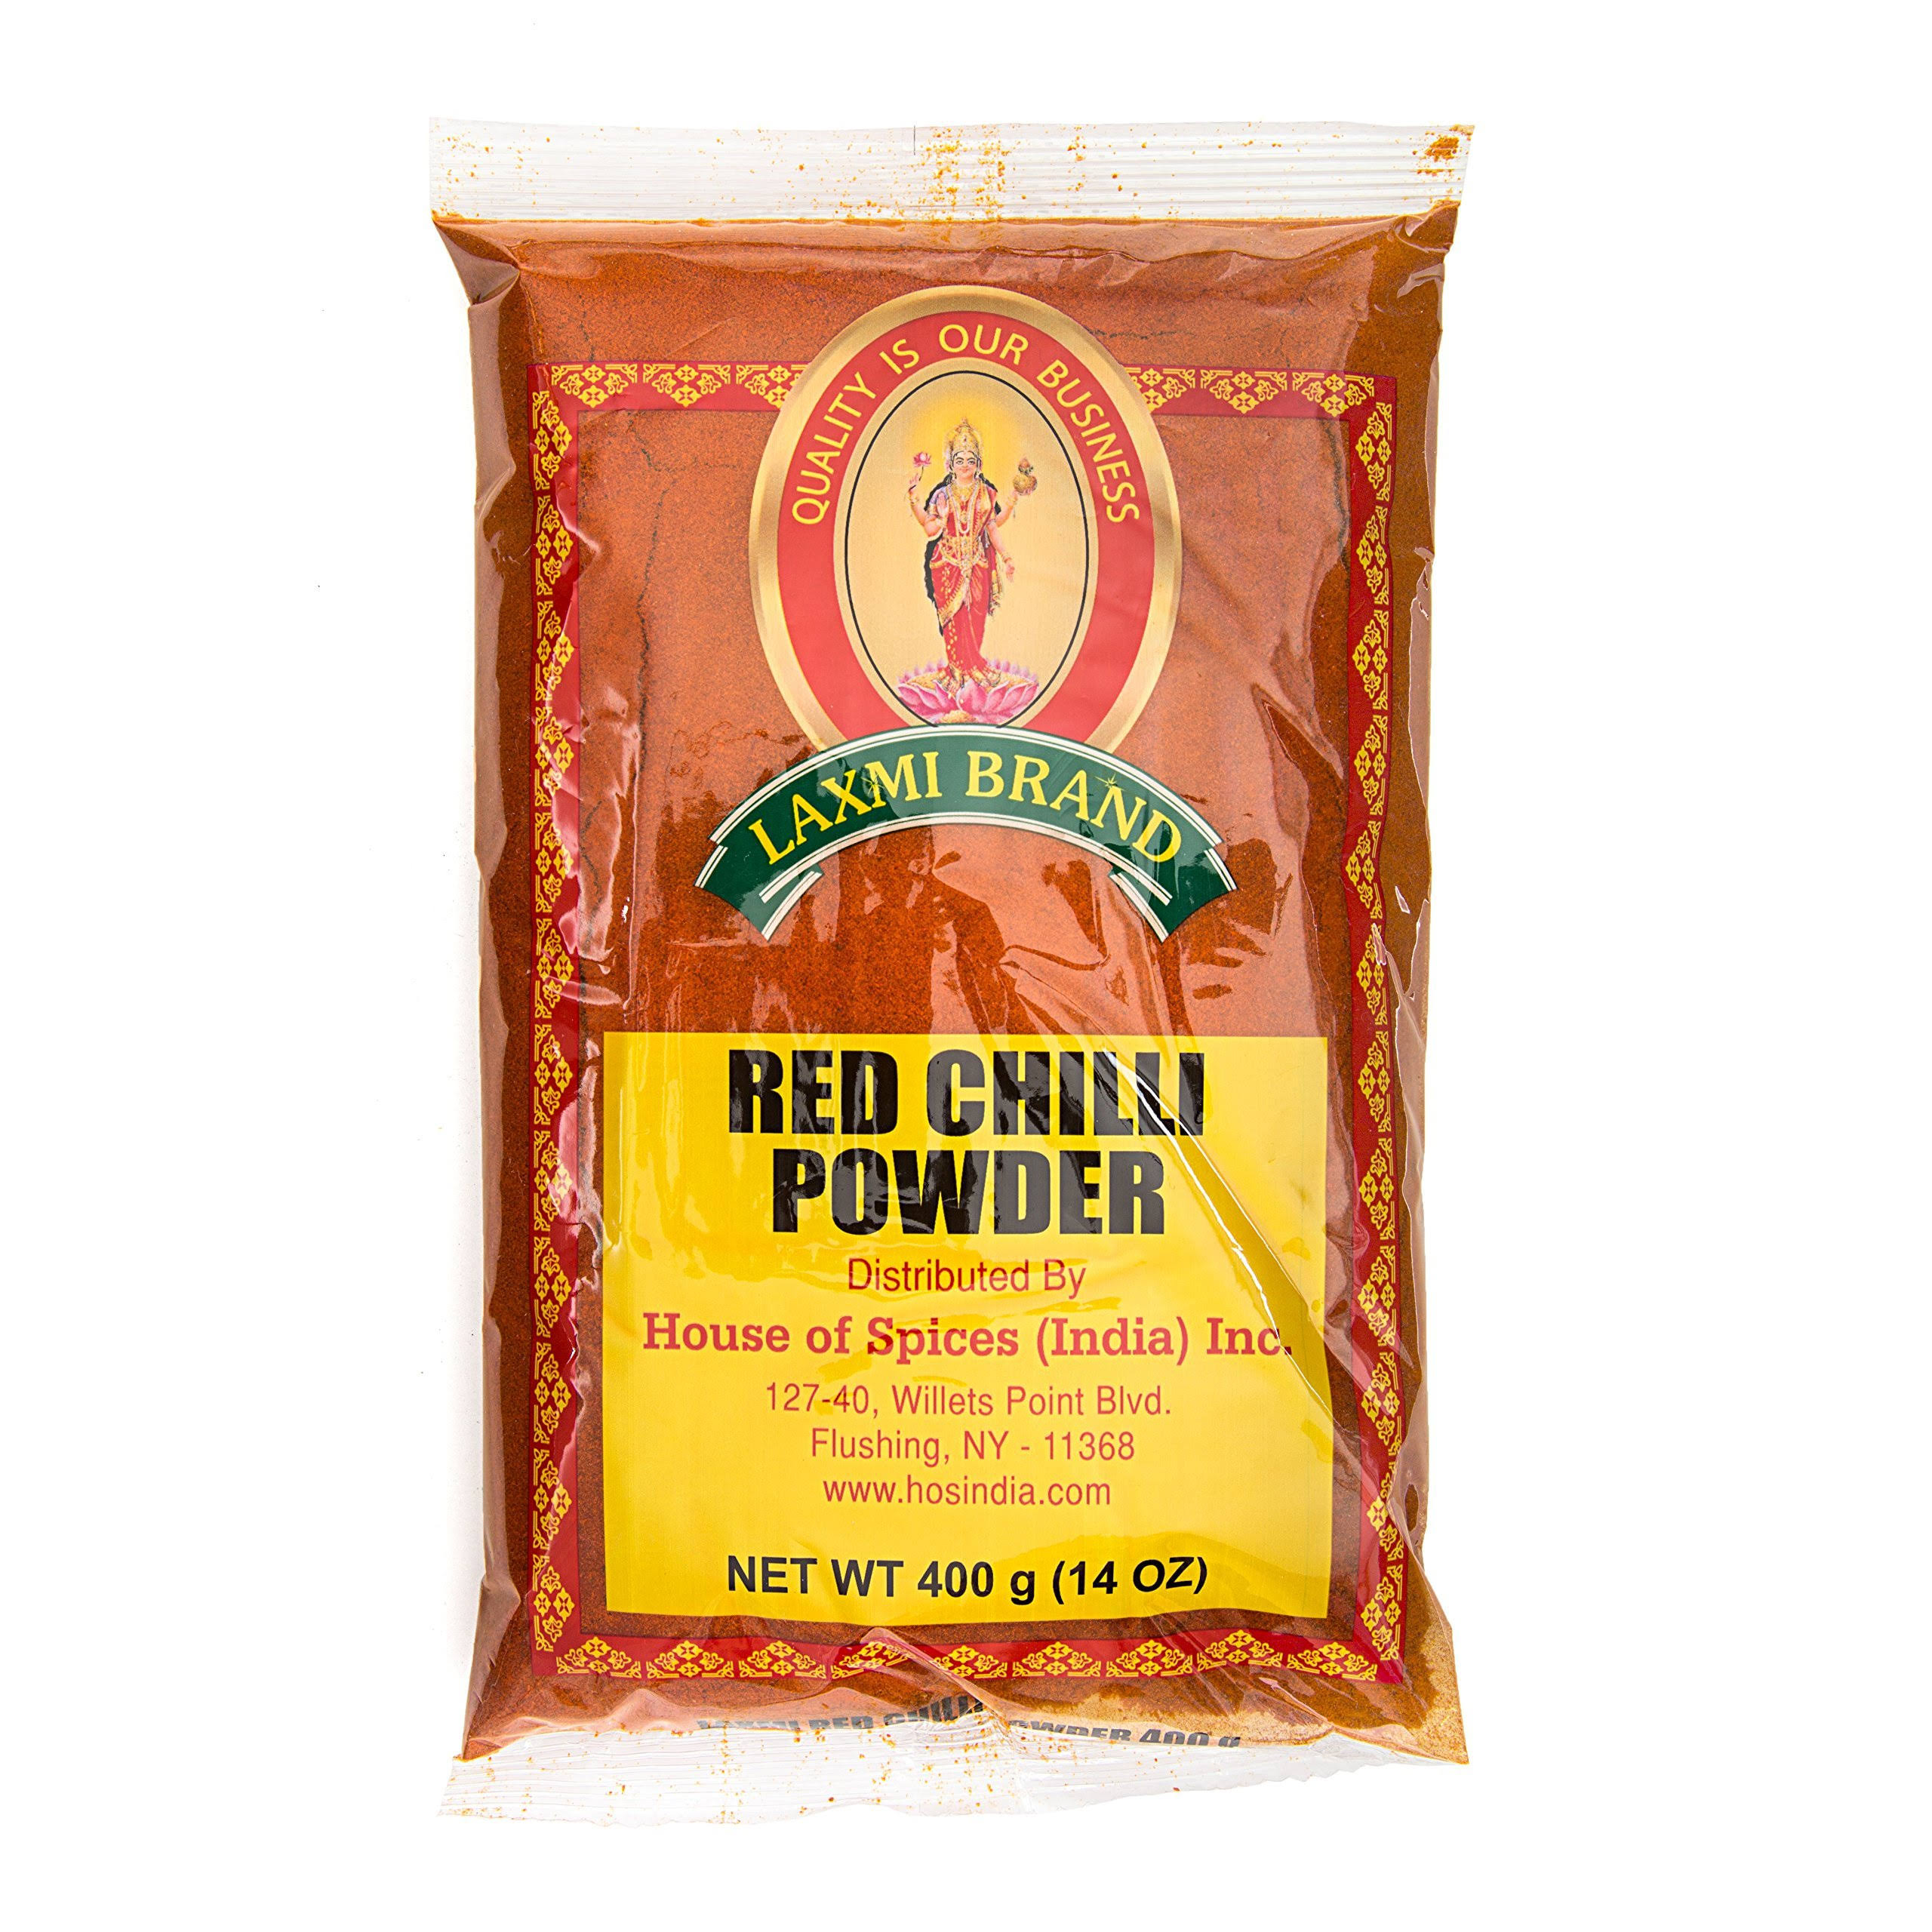 Laxmi Brand, Red Chili Powder, Authentic Chili Powder from India (14oz